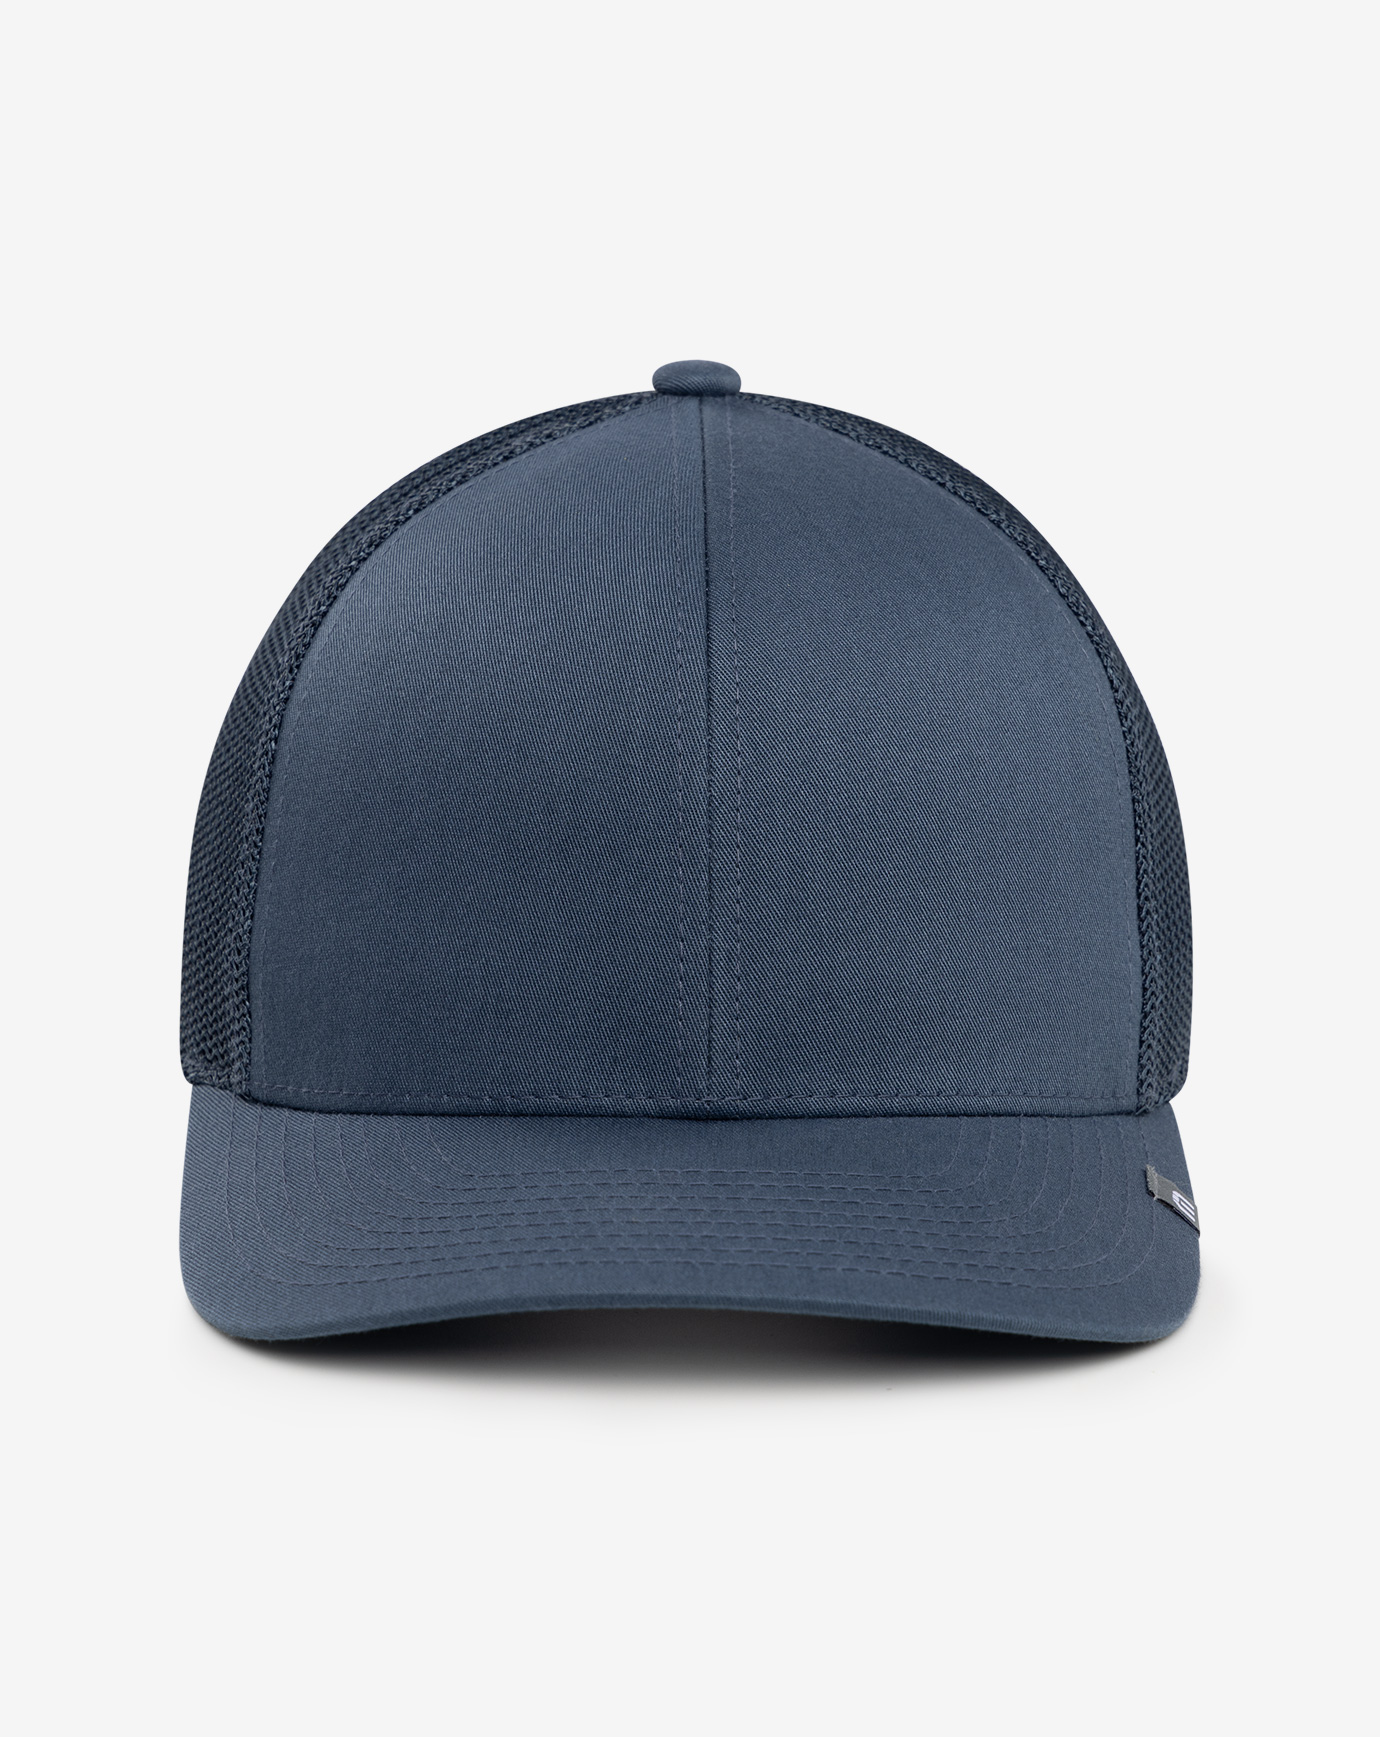 California State Flag Hat, Navy Blue Navy